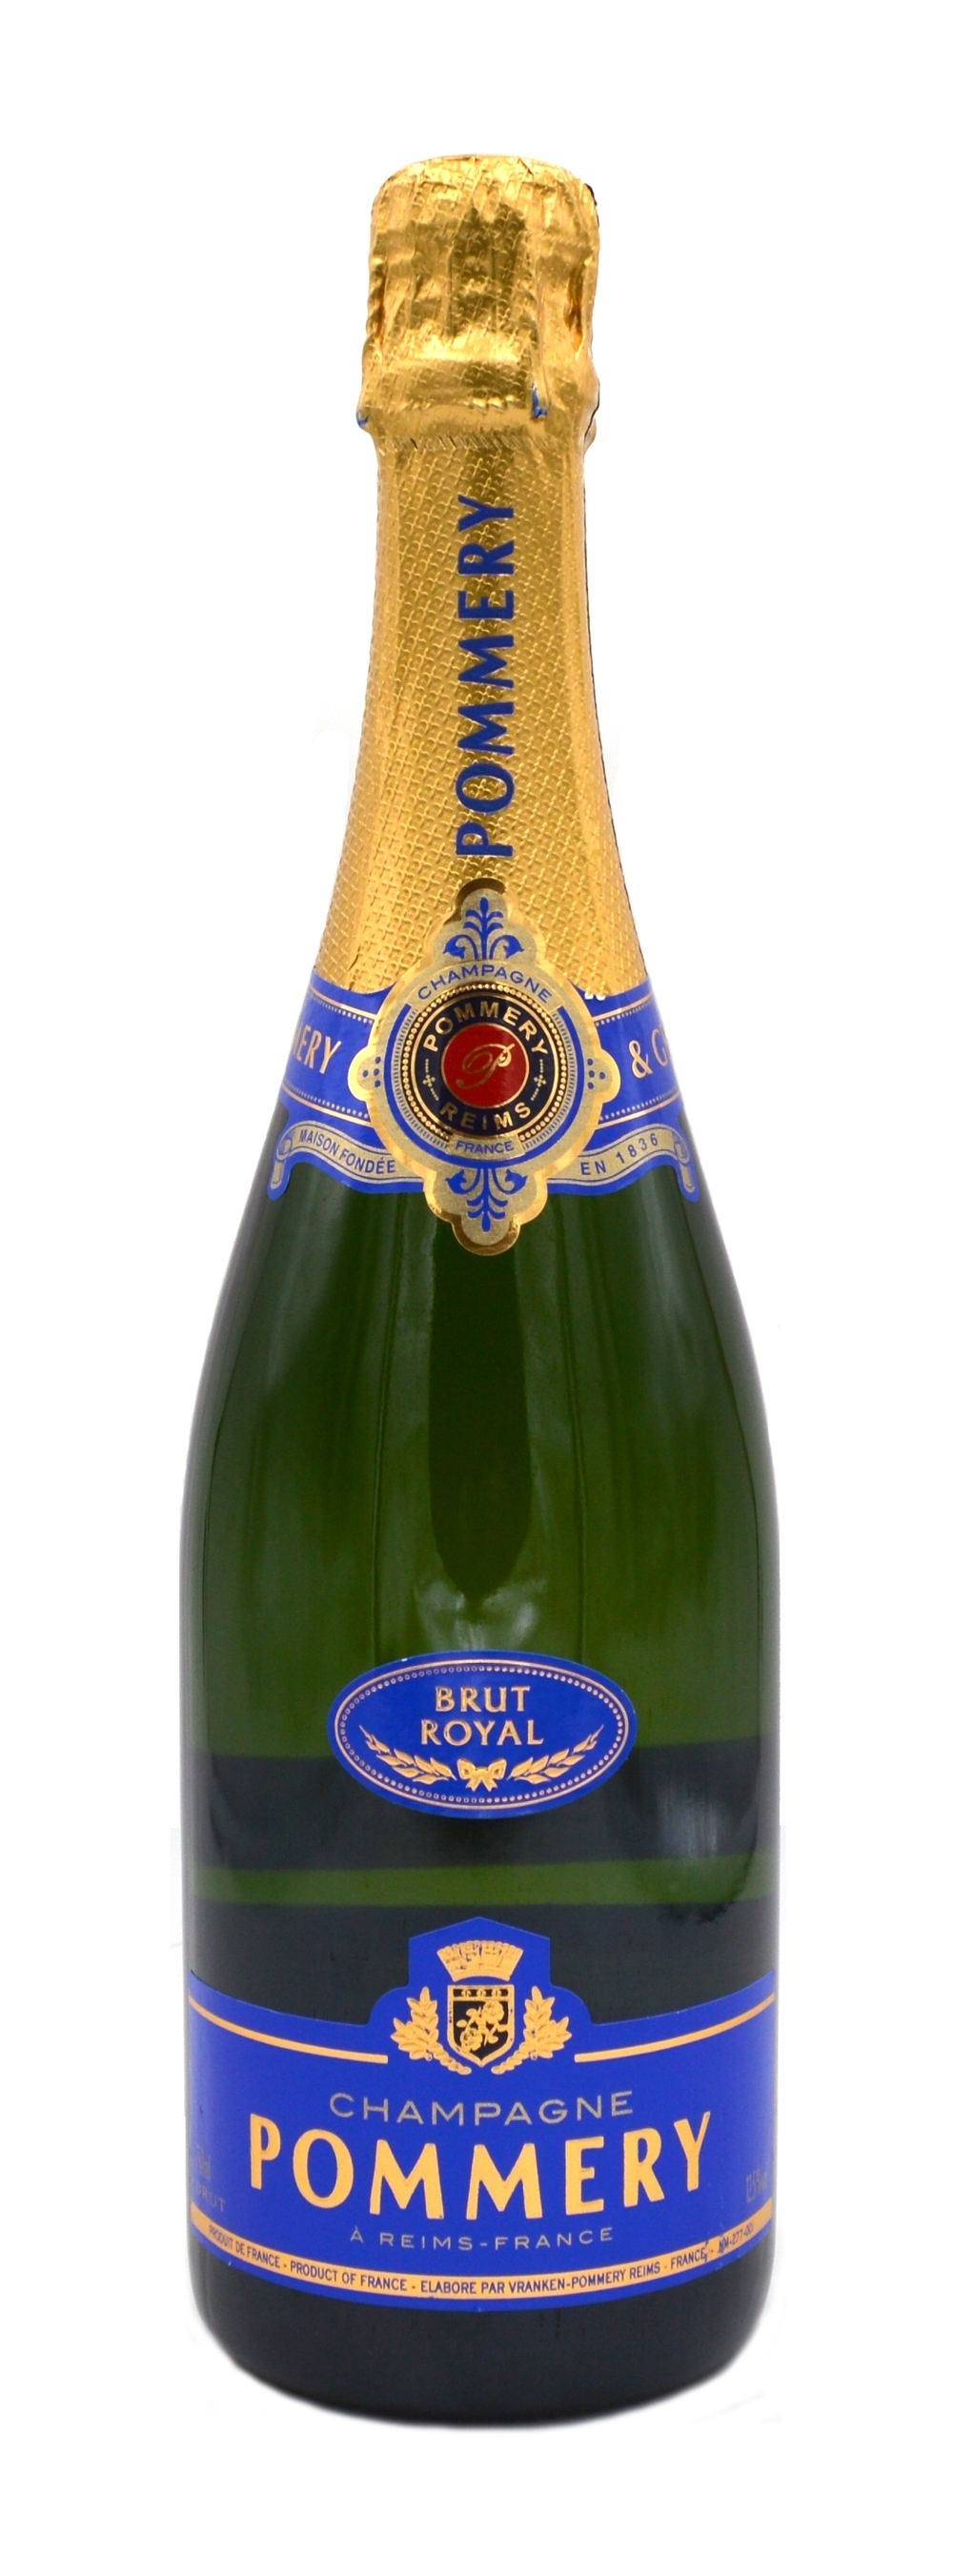 Pommery Brut Royal, dry champagne, 075l | worldwidespirits